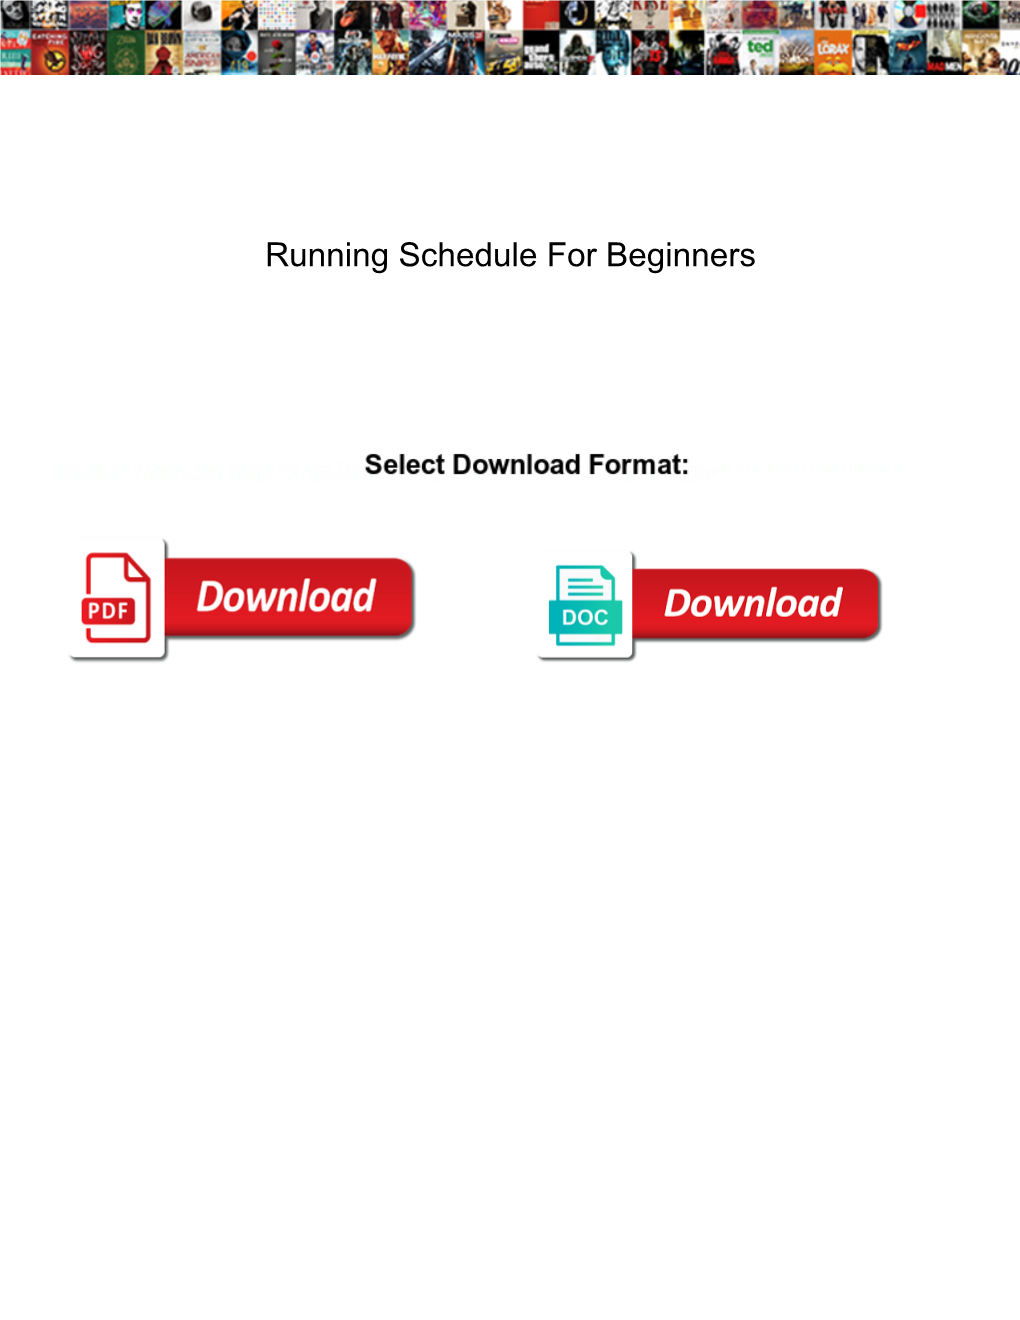 Running Schedule for Beginners